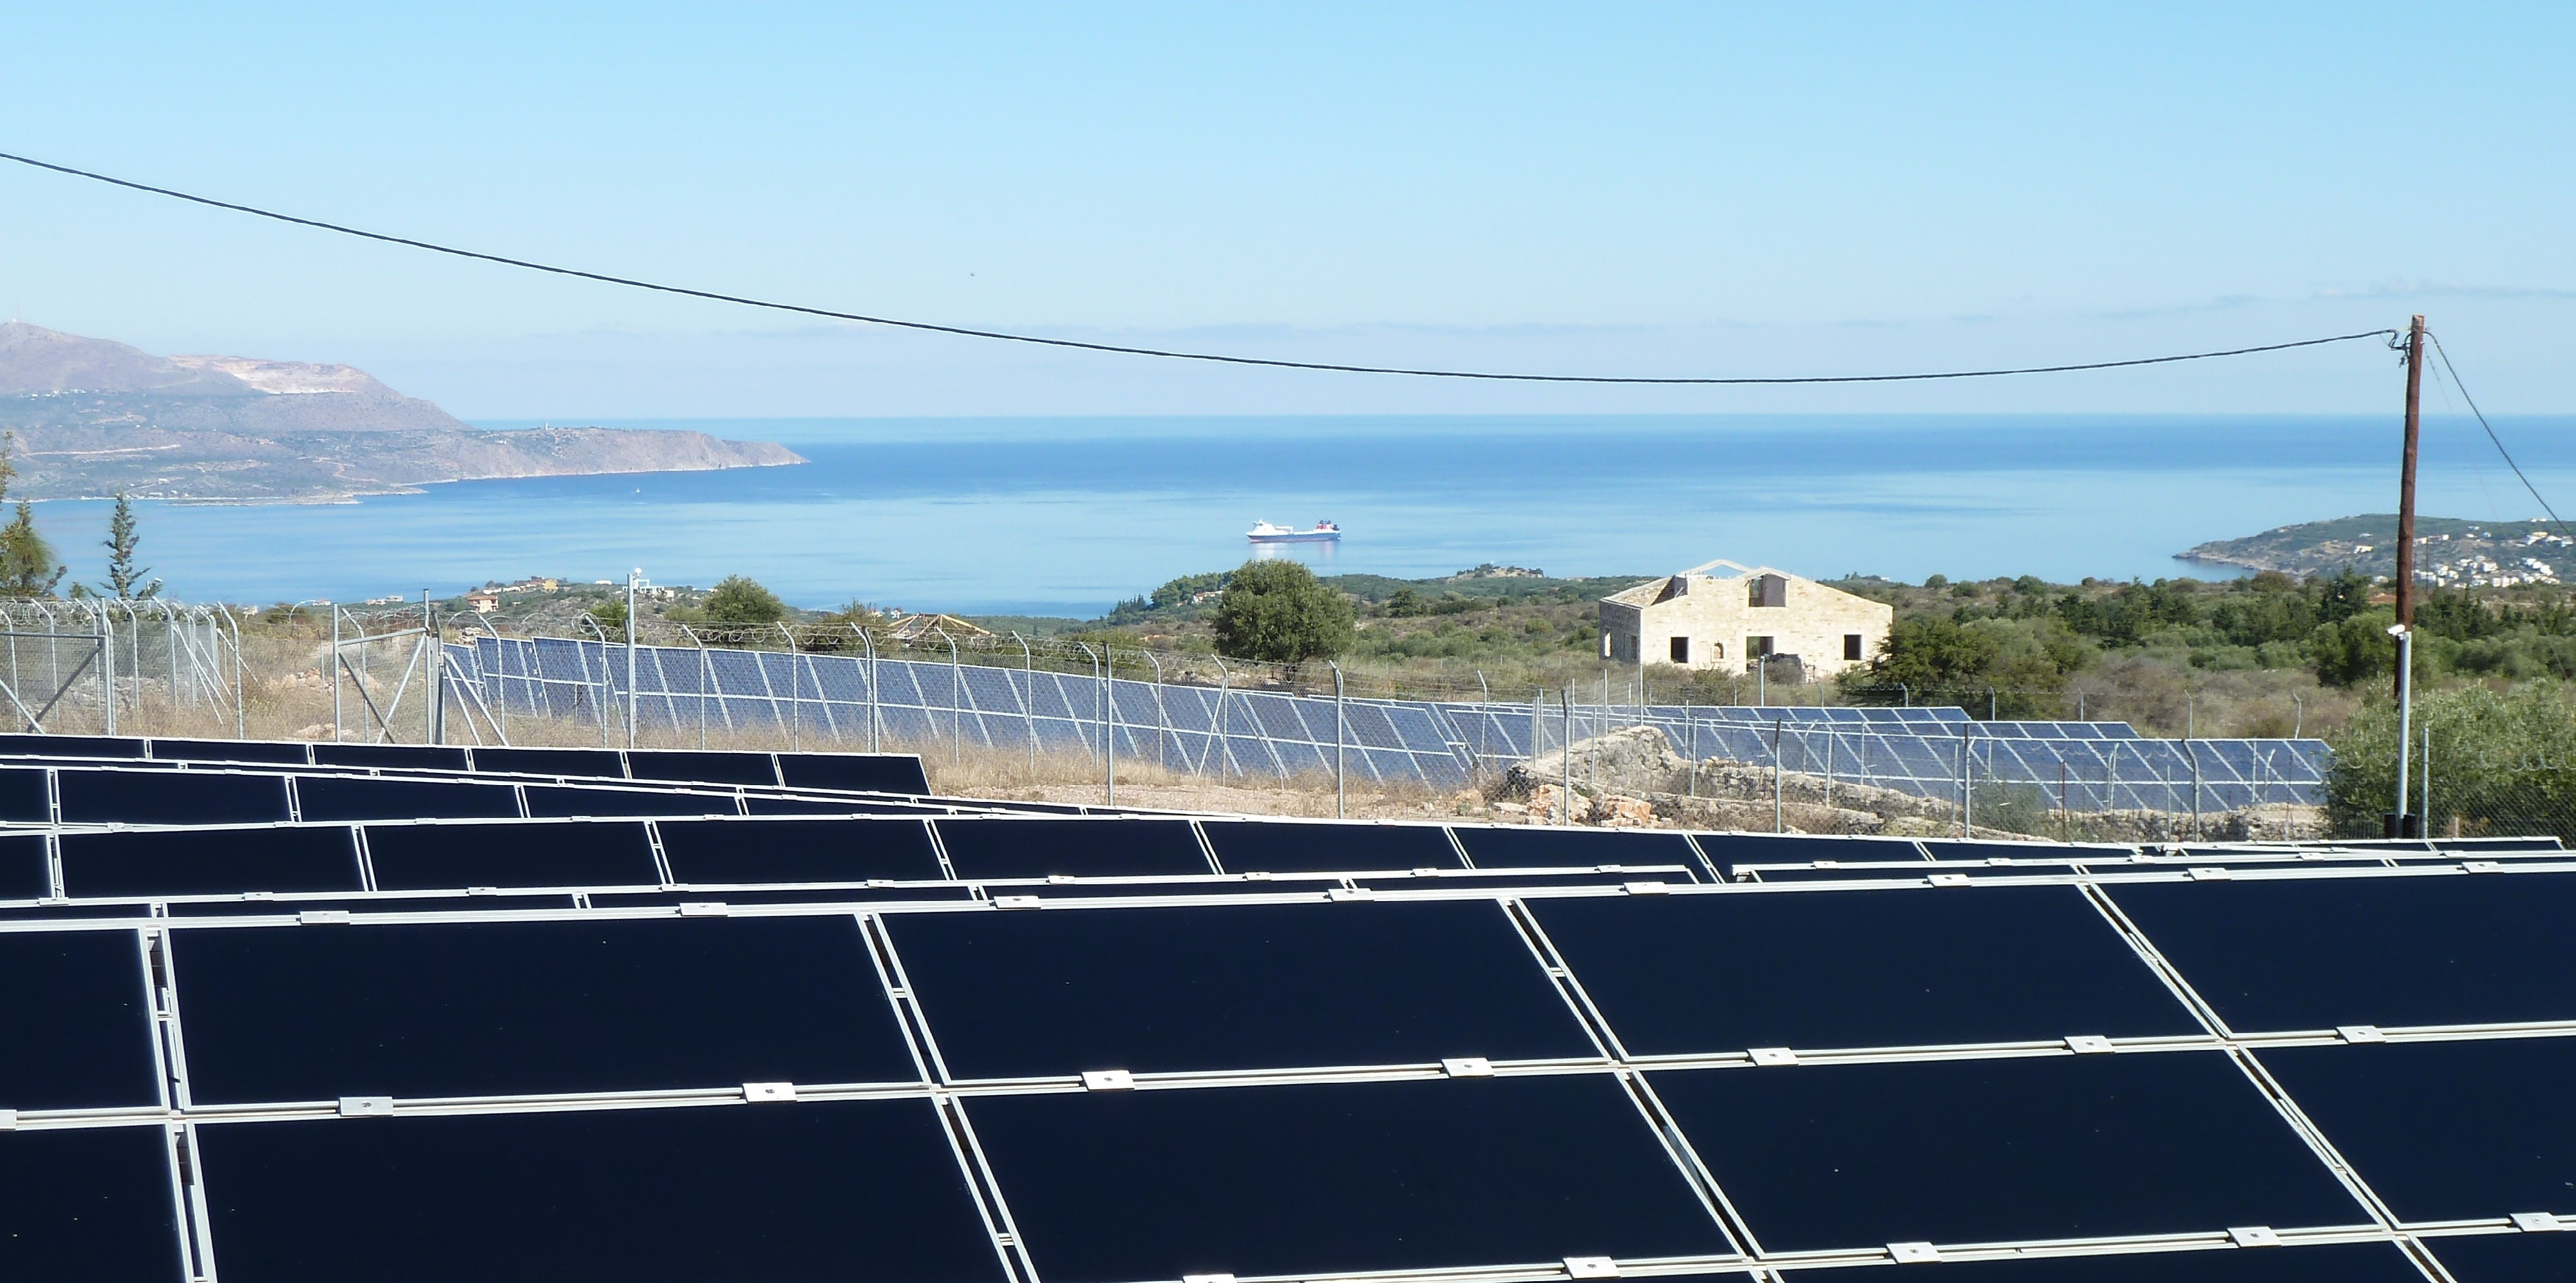 05.03.2019 – PV plants in Greece: Successful solar year 2018